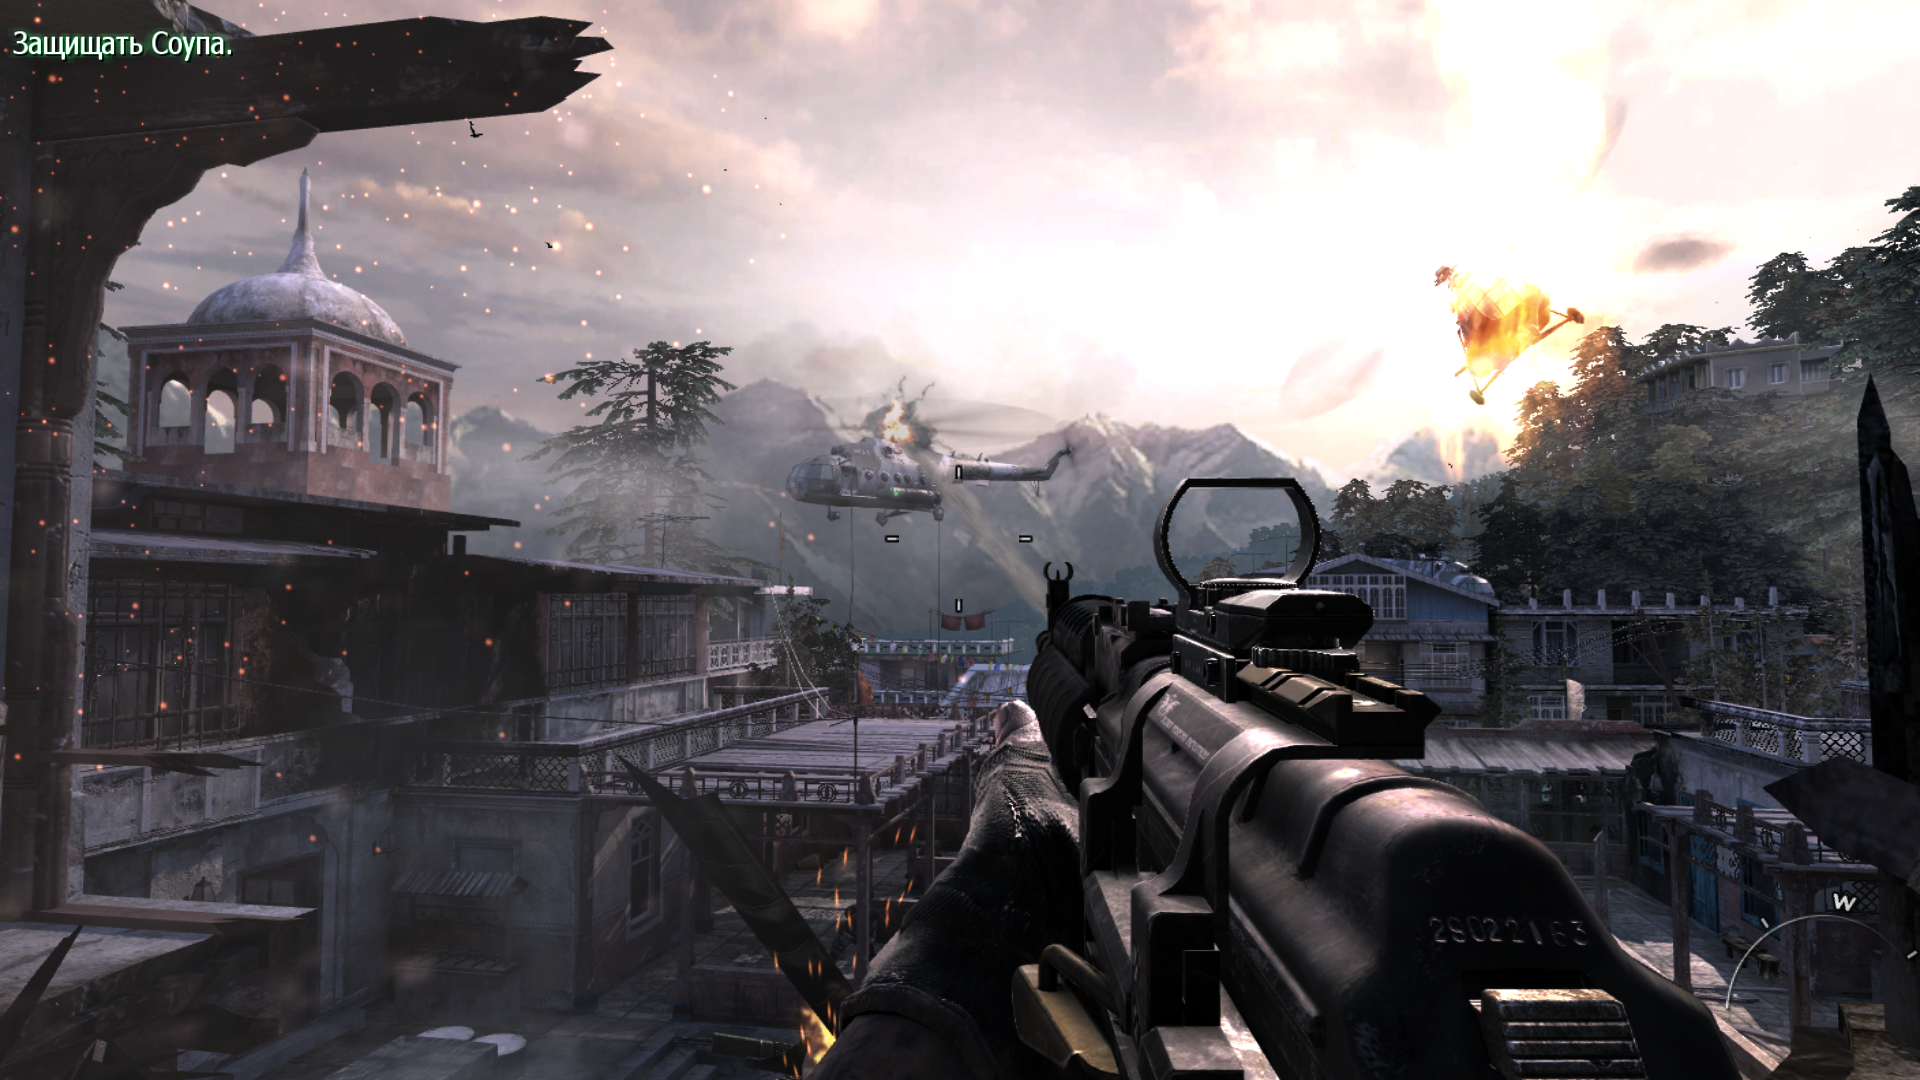 Call of Duty: Modern Warfare 3. Call of Duty mw3. Калл оф дьюти Модерн варфаре 3. Калл оф дьюти Модерн варфэйр 3.